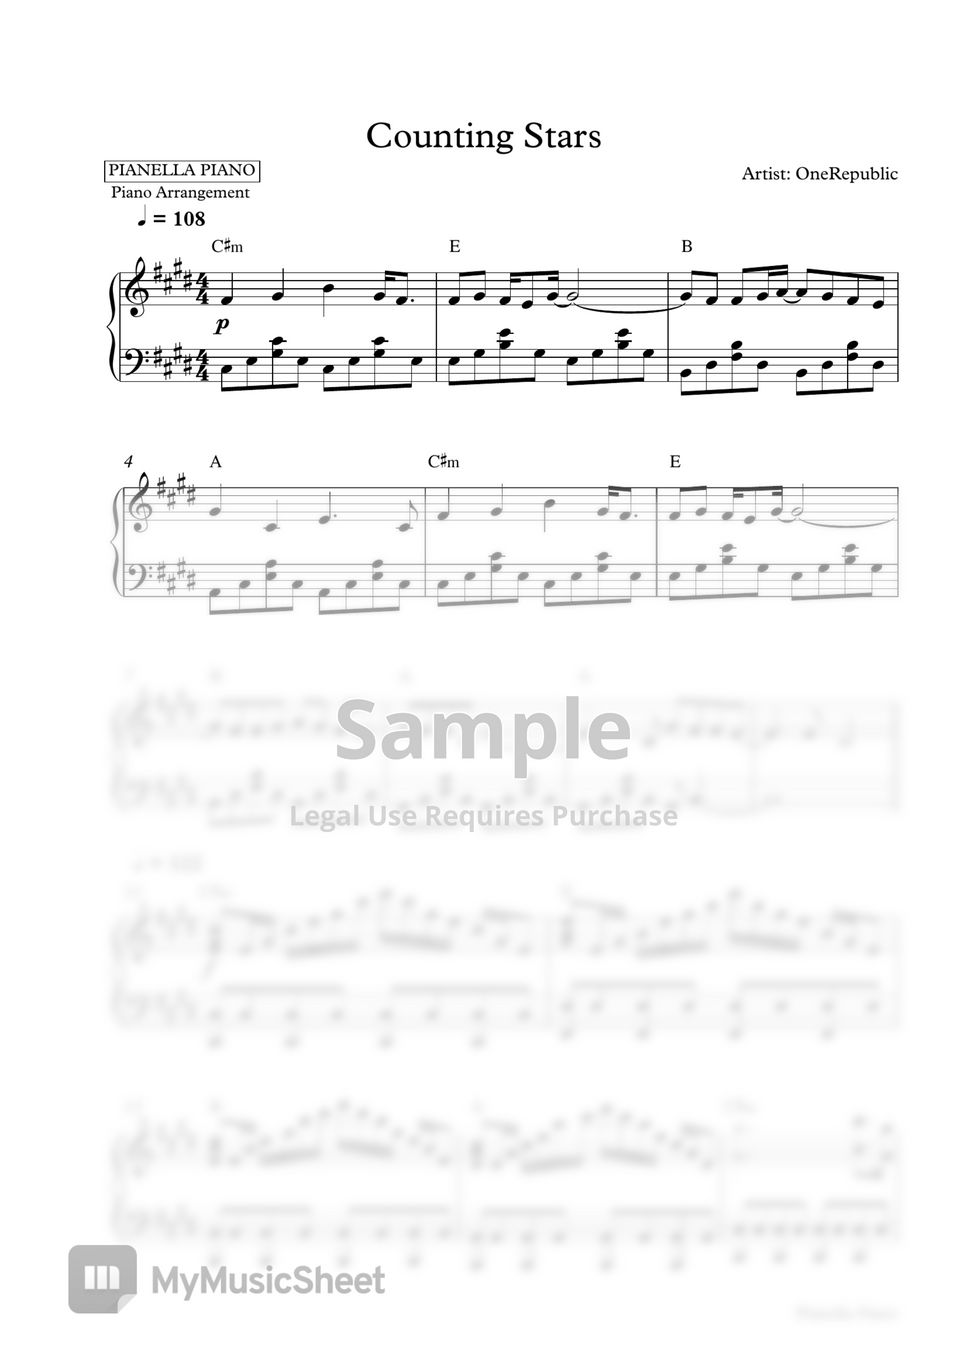 OneRepublic - Counting Stars (Piano Sheet) by Pianella Piano